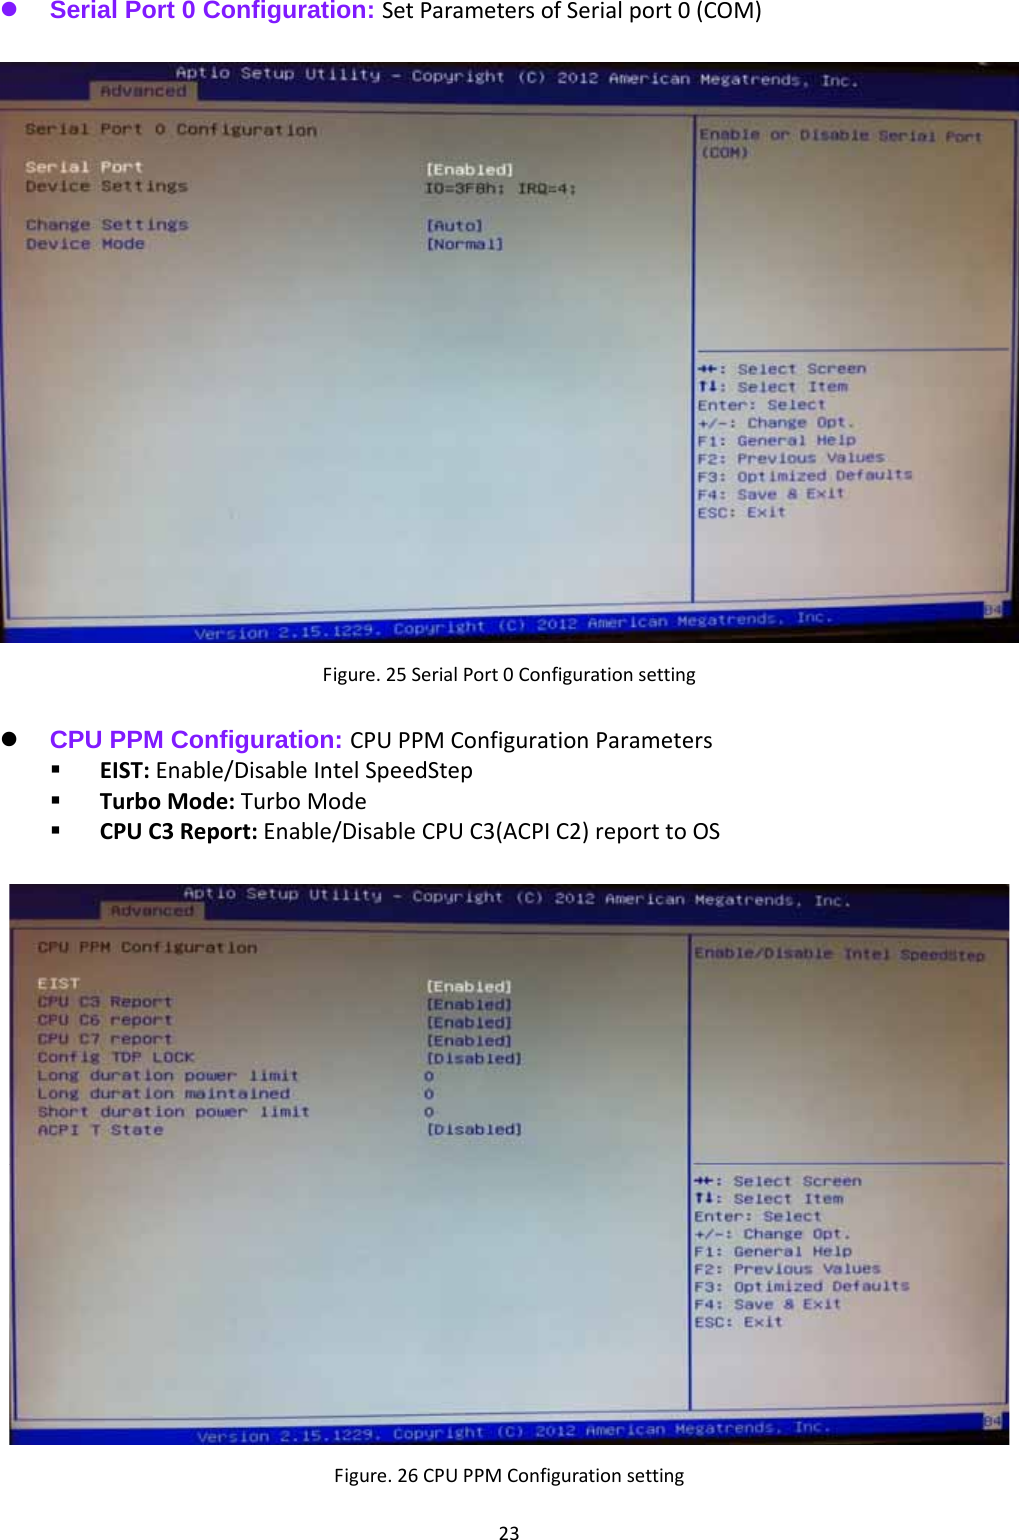 23 Serial Port 0 Configuration: SetParametersofSerialport0(COM)  Figure.25SerialPort0Configurationsetting  CPU PPM Configuration: CPUPPMConfigurationParameters EIST:Enable/DisableIntelSpeedStep TurboMode:TurboMode CPUC3Report:Enable/DisableCPUC3(ACPIC2)reporttoOSFigure.26CPUPPMConfigurationsetting 